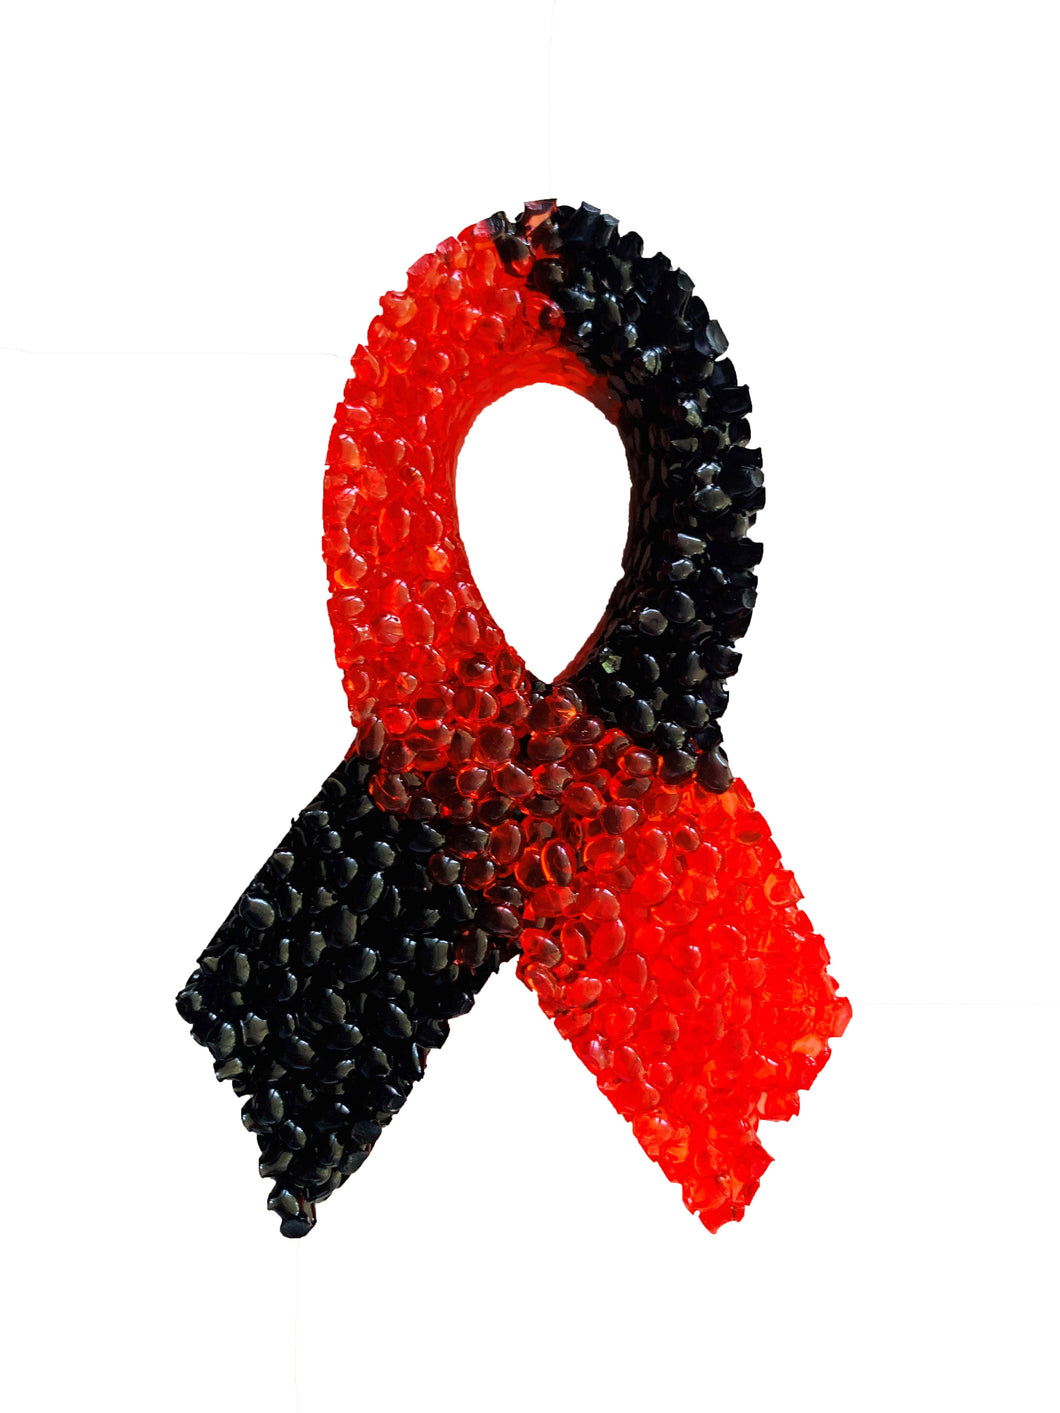 Black and Red Awareness Ribbons